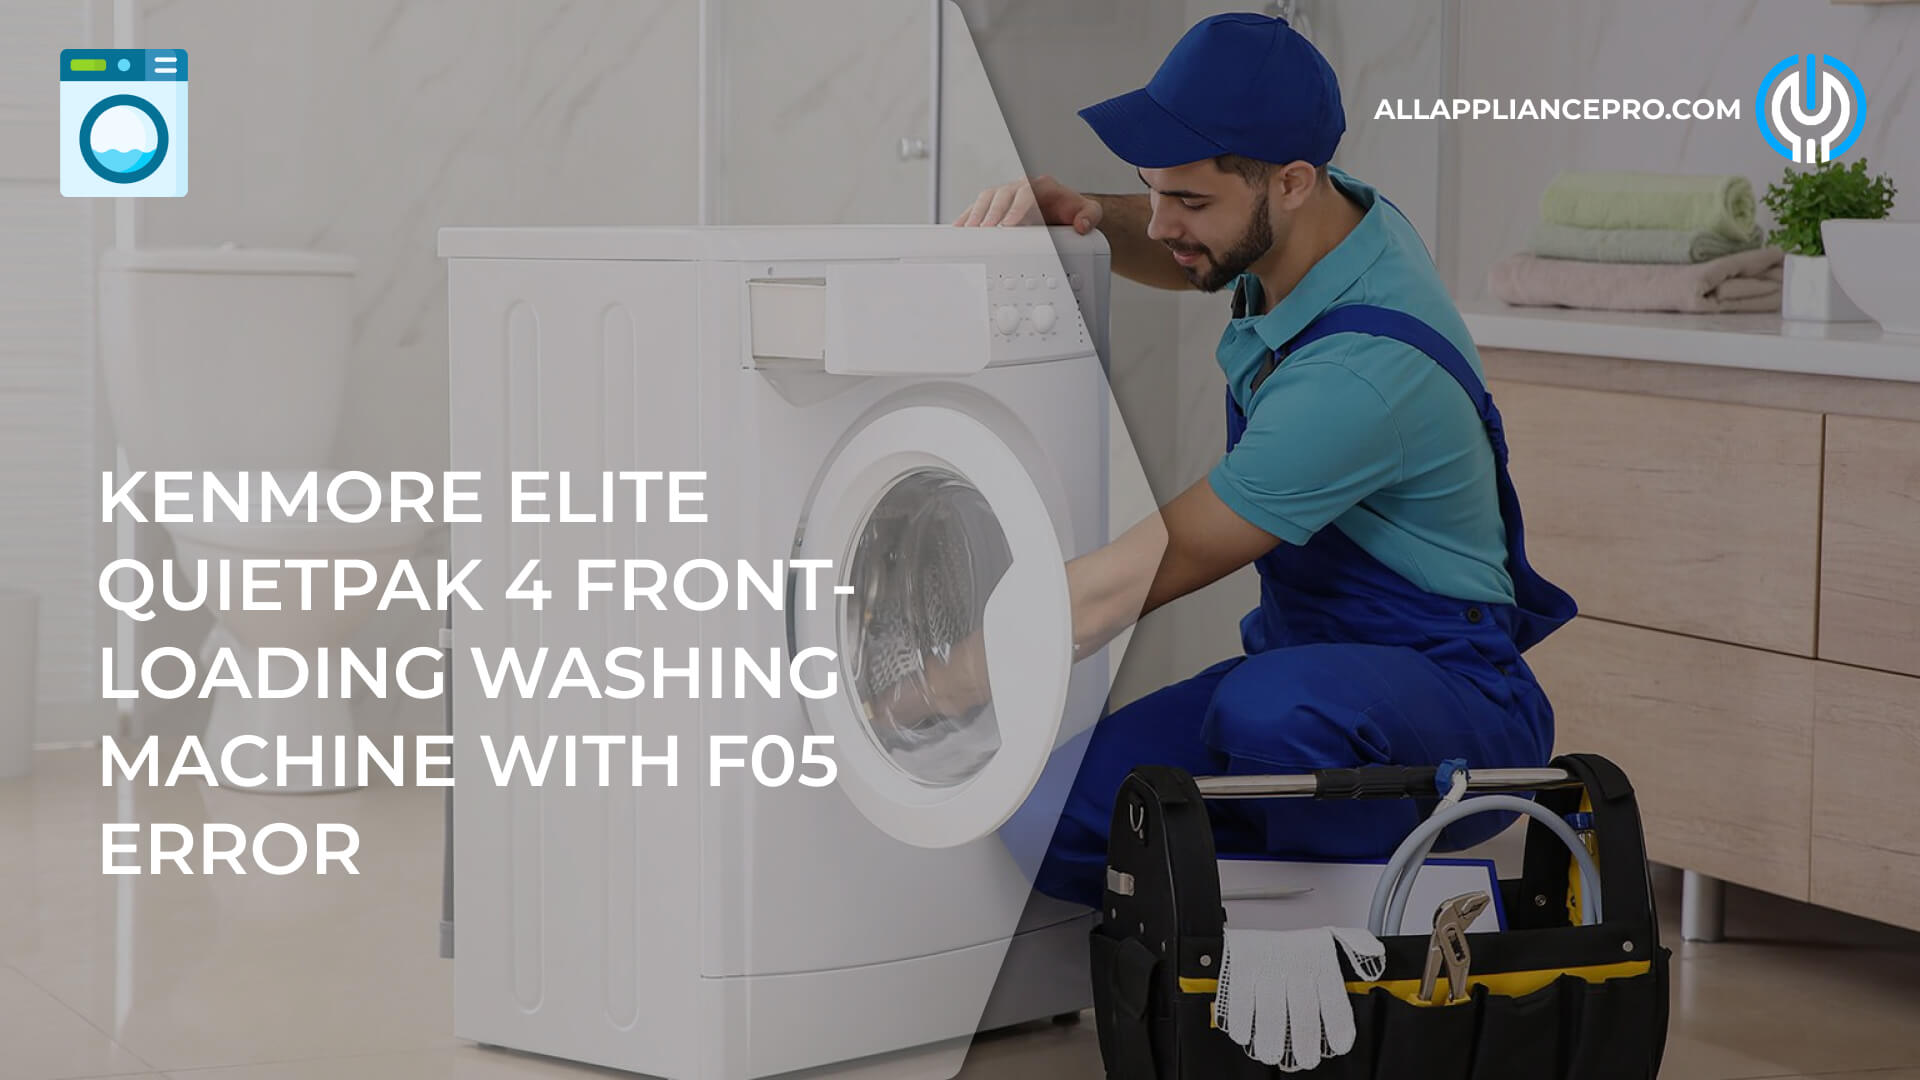 F05 Error on Kenmore Elite Quietpak 4 Front-Loading Washing Machines